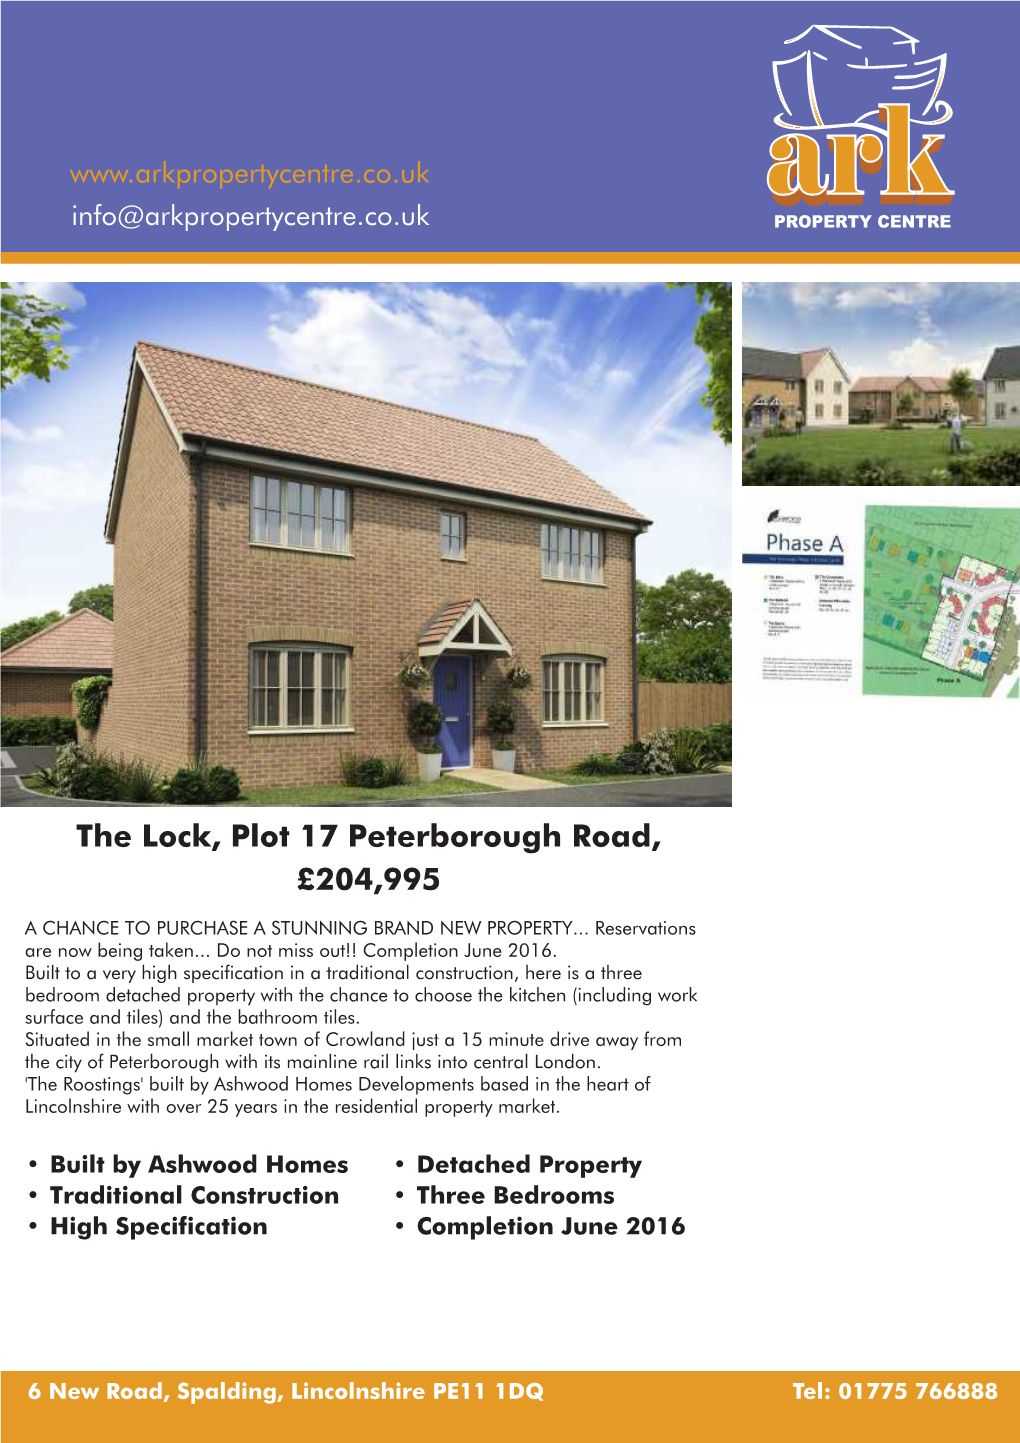 The Lock, Plot 17 Peterborough Road, £204,995